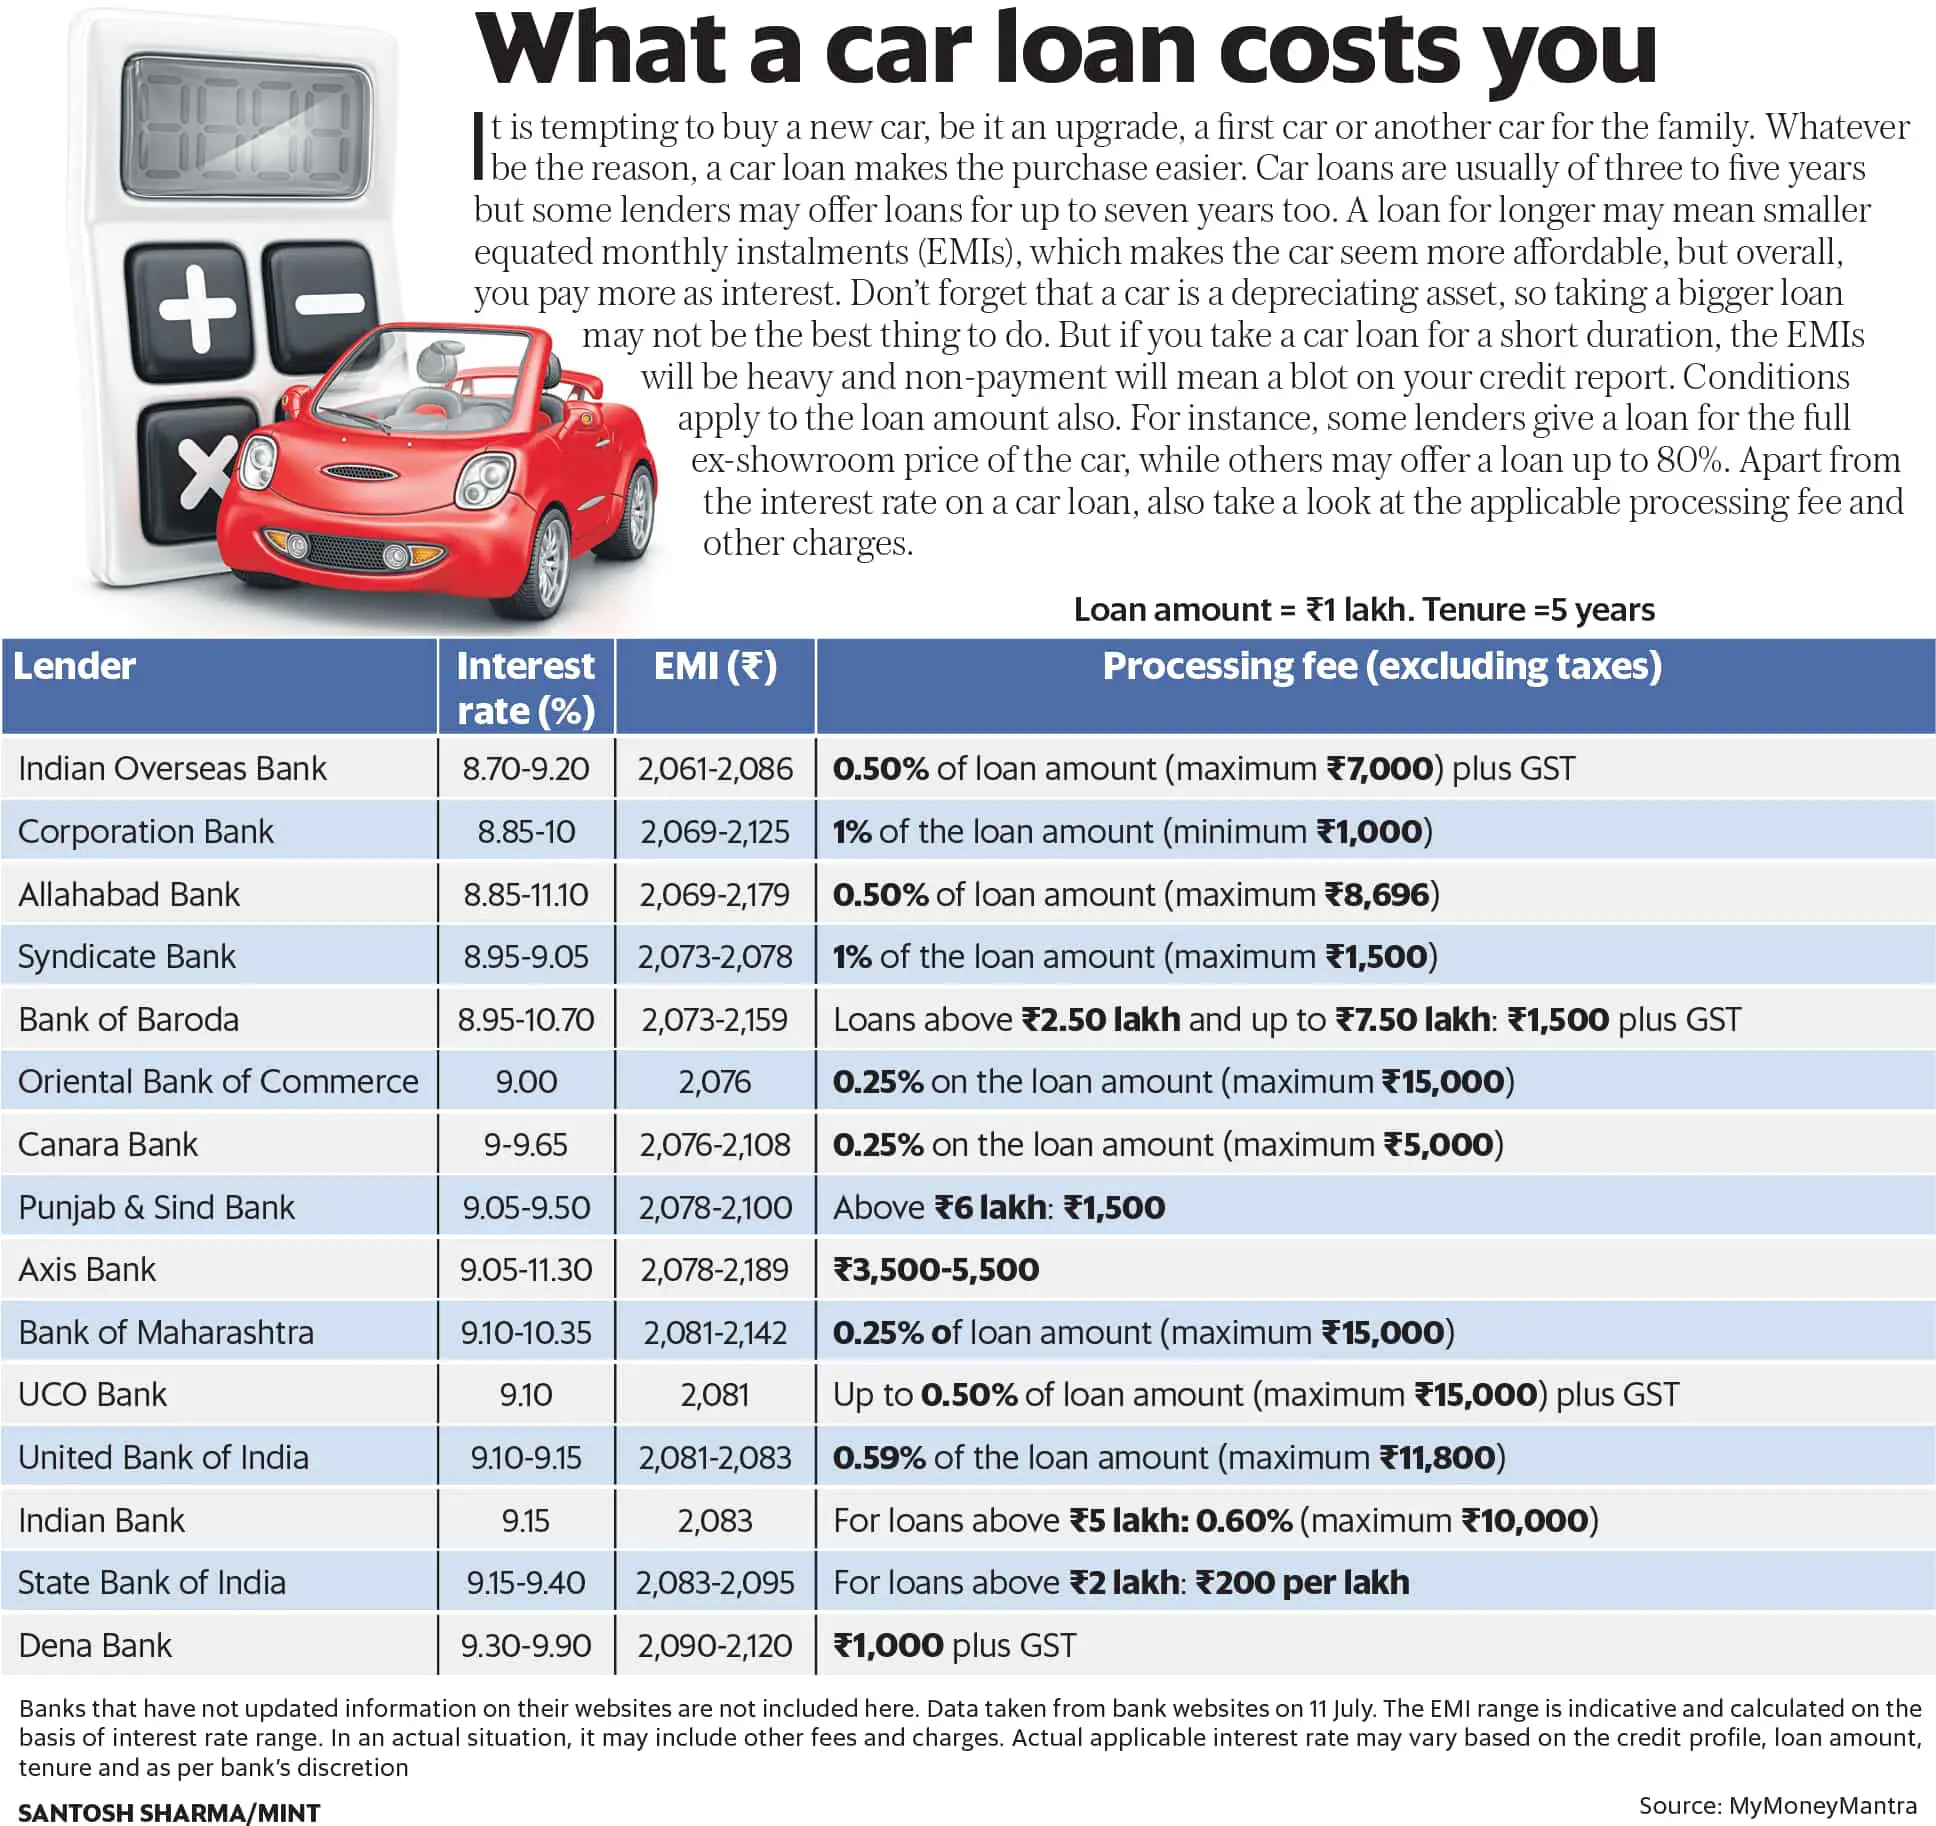 Car loan compared: Interest rate, EMI, processing fee